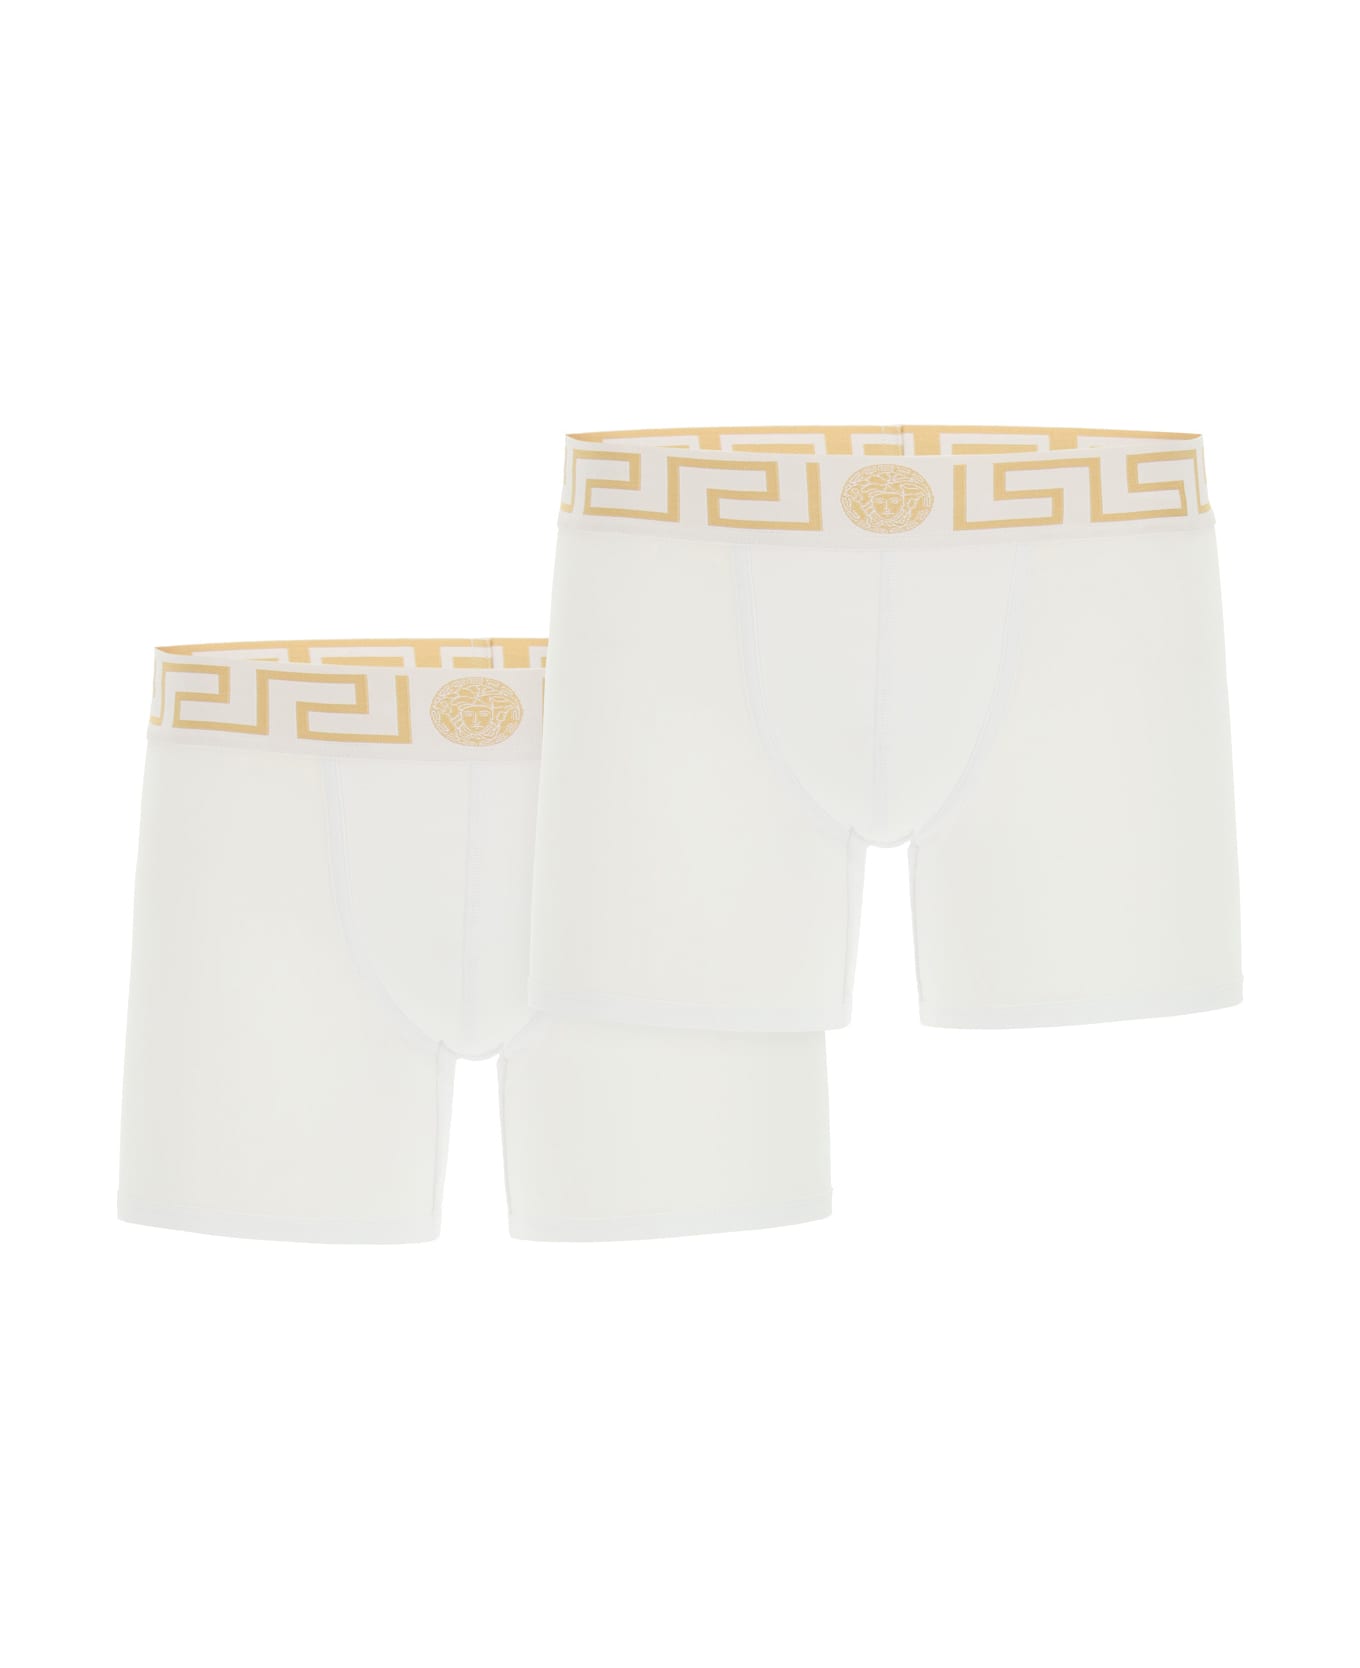 Versace Bi-pack Underwear Greca Border Trunks - BIANCO GRECA ORO スイムトランクス